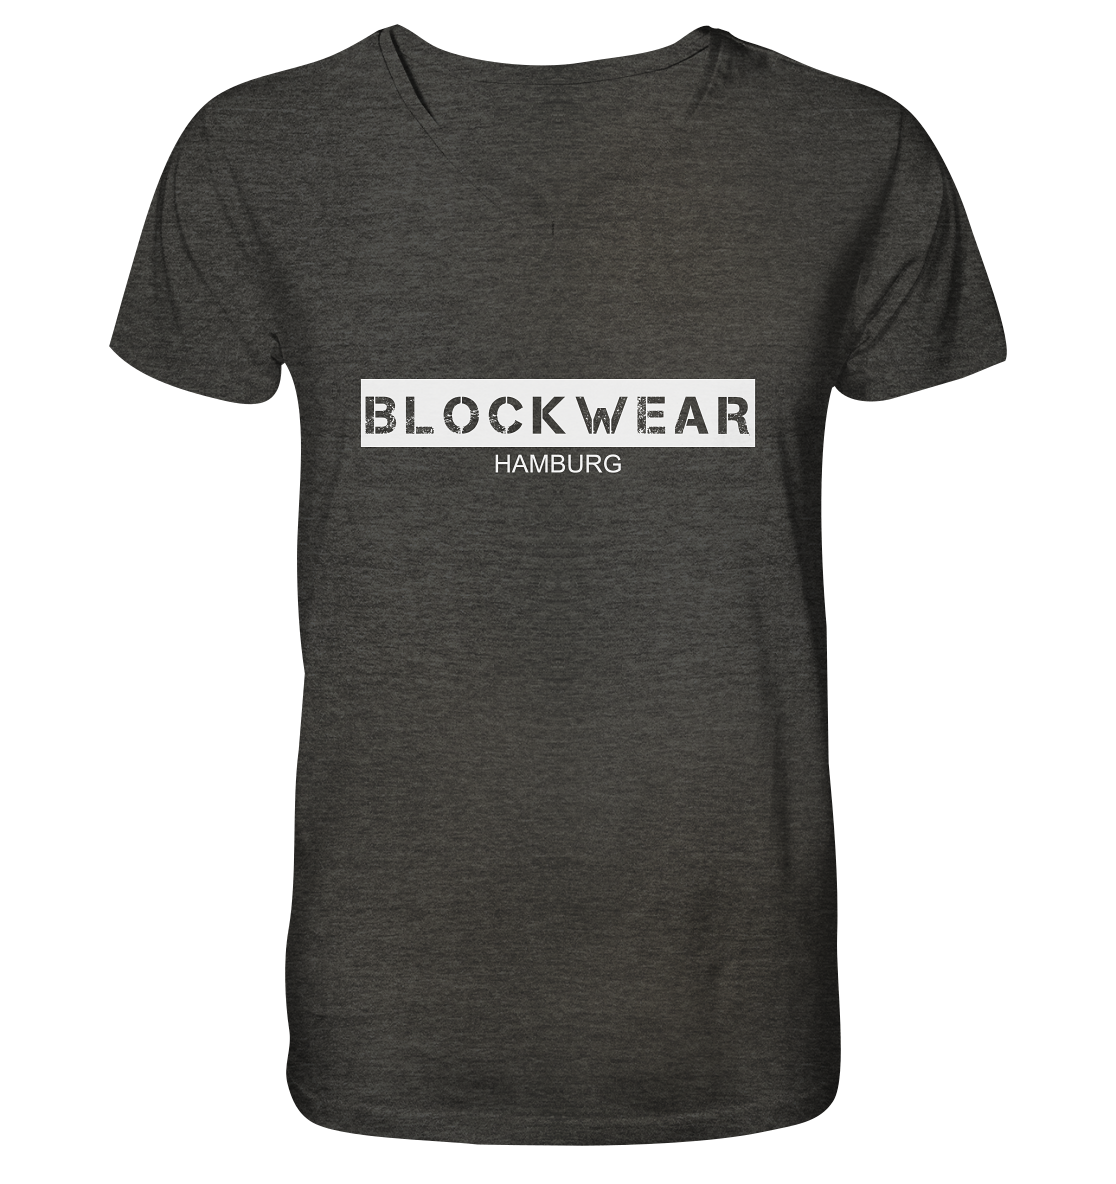 N.O.S.W. BLOCK Shirt "BLOCKWEAR HAMBURG" Männer Organic V-Neck Shirt dunkelgrau